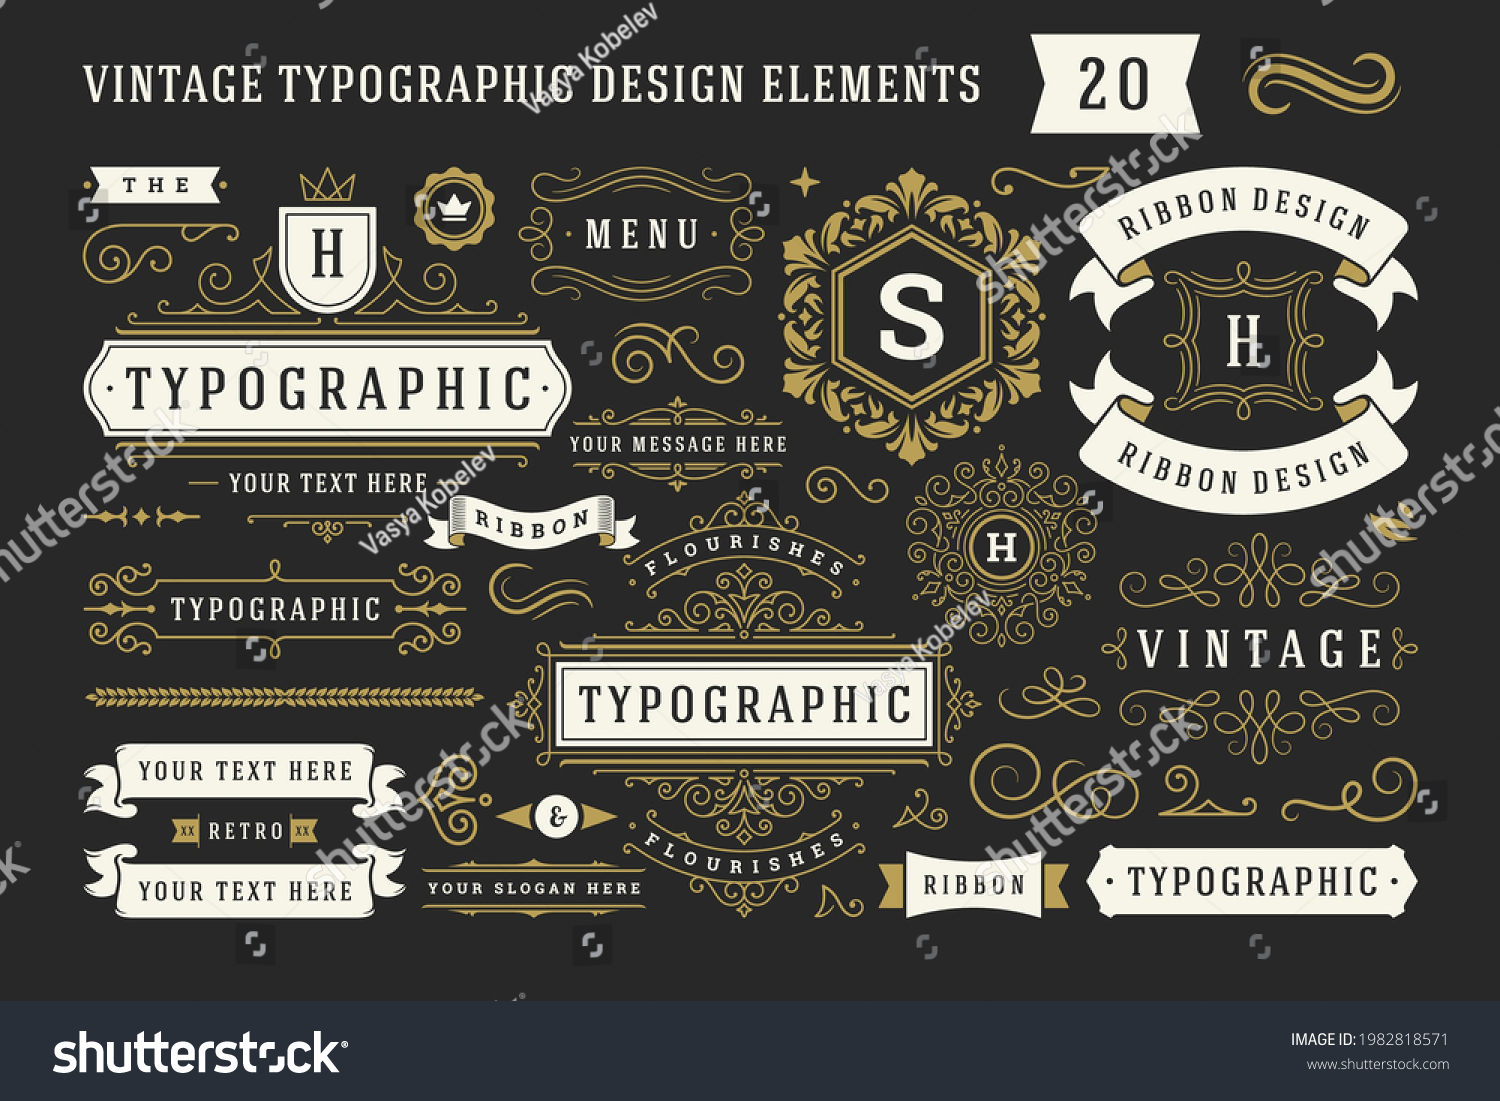 Vintage Typographic Decorative Ornament Design Elements Stock Vector ...